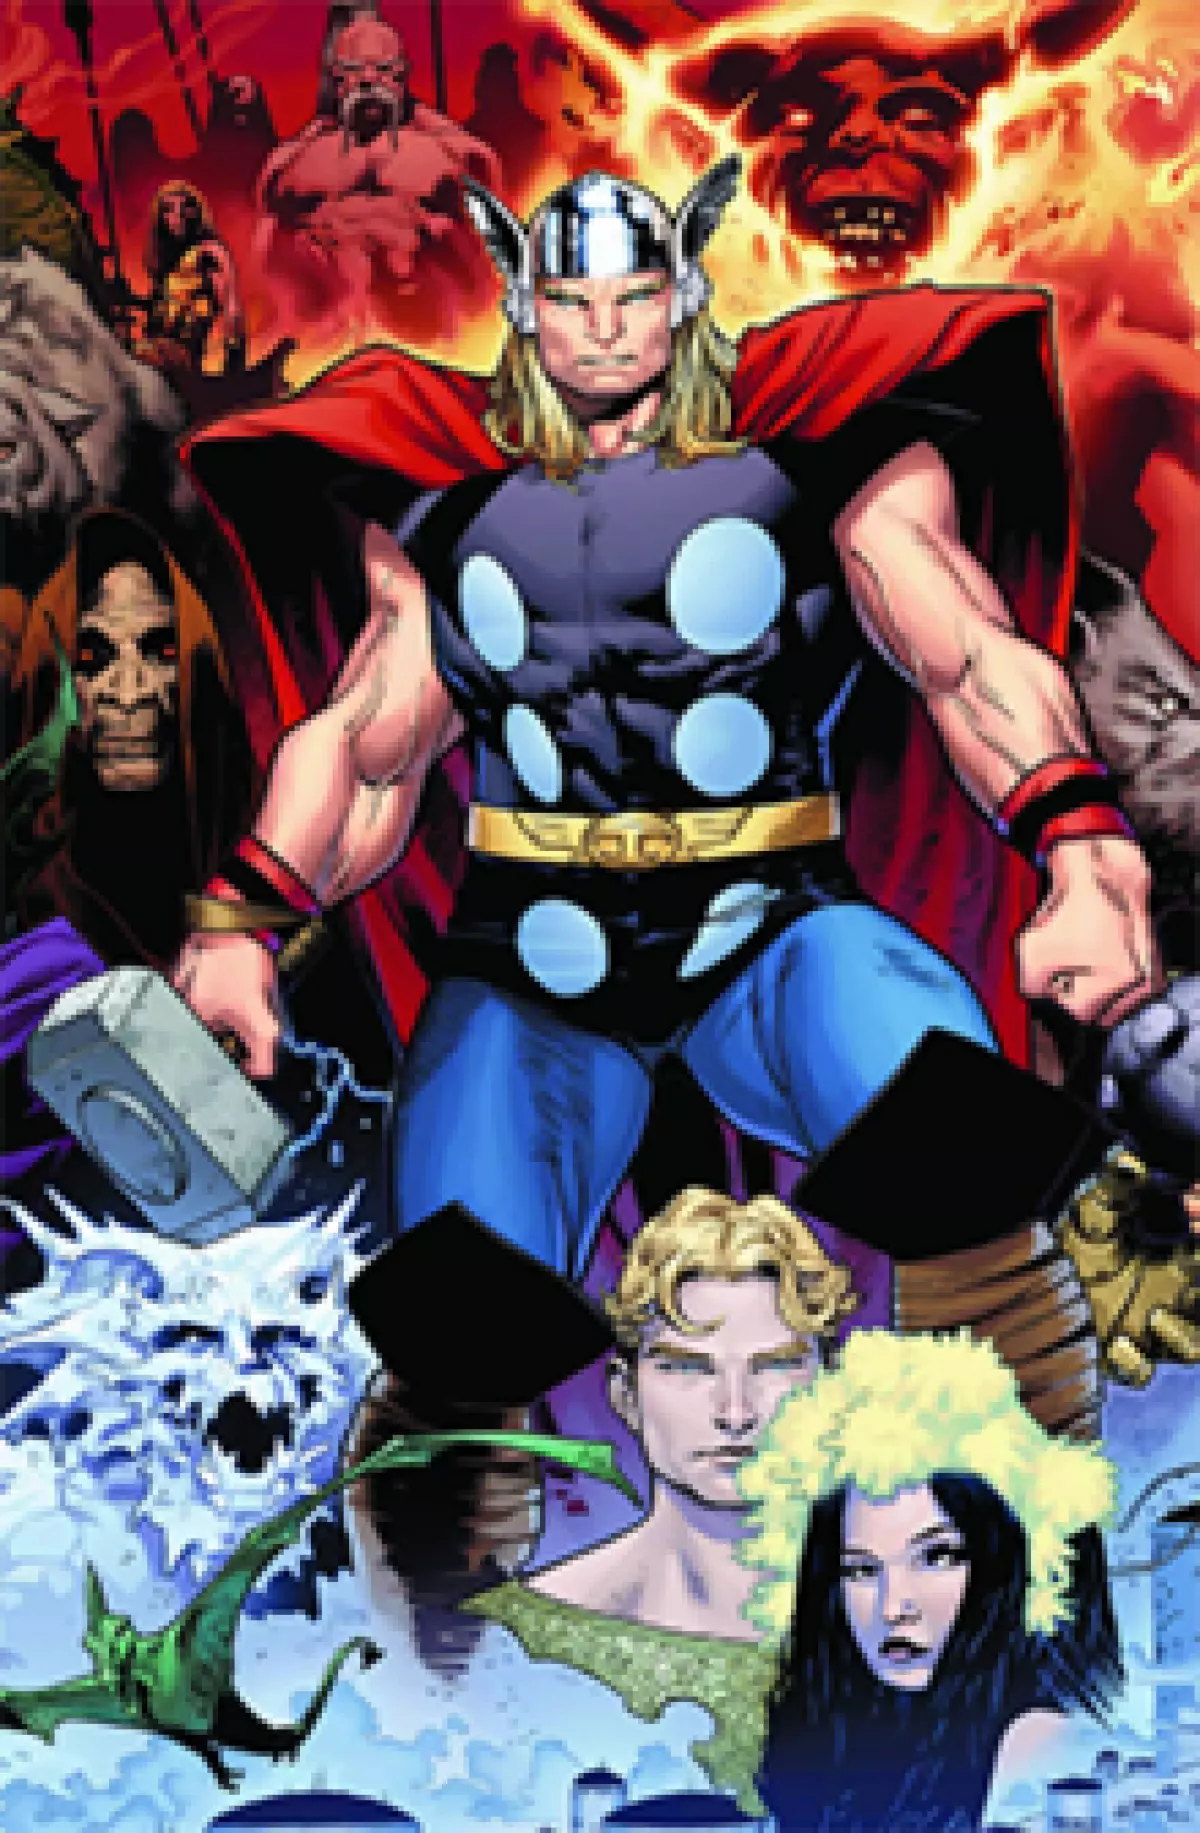 Thor (Marvel Comics)